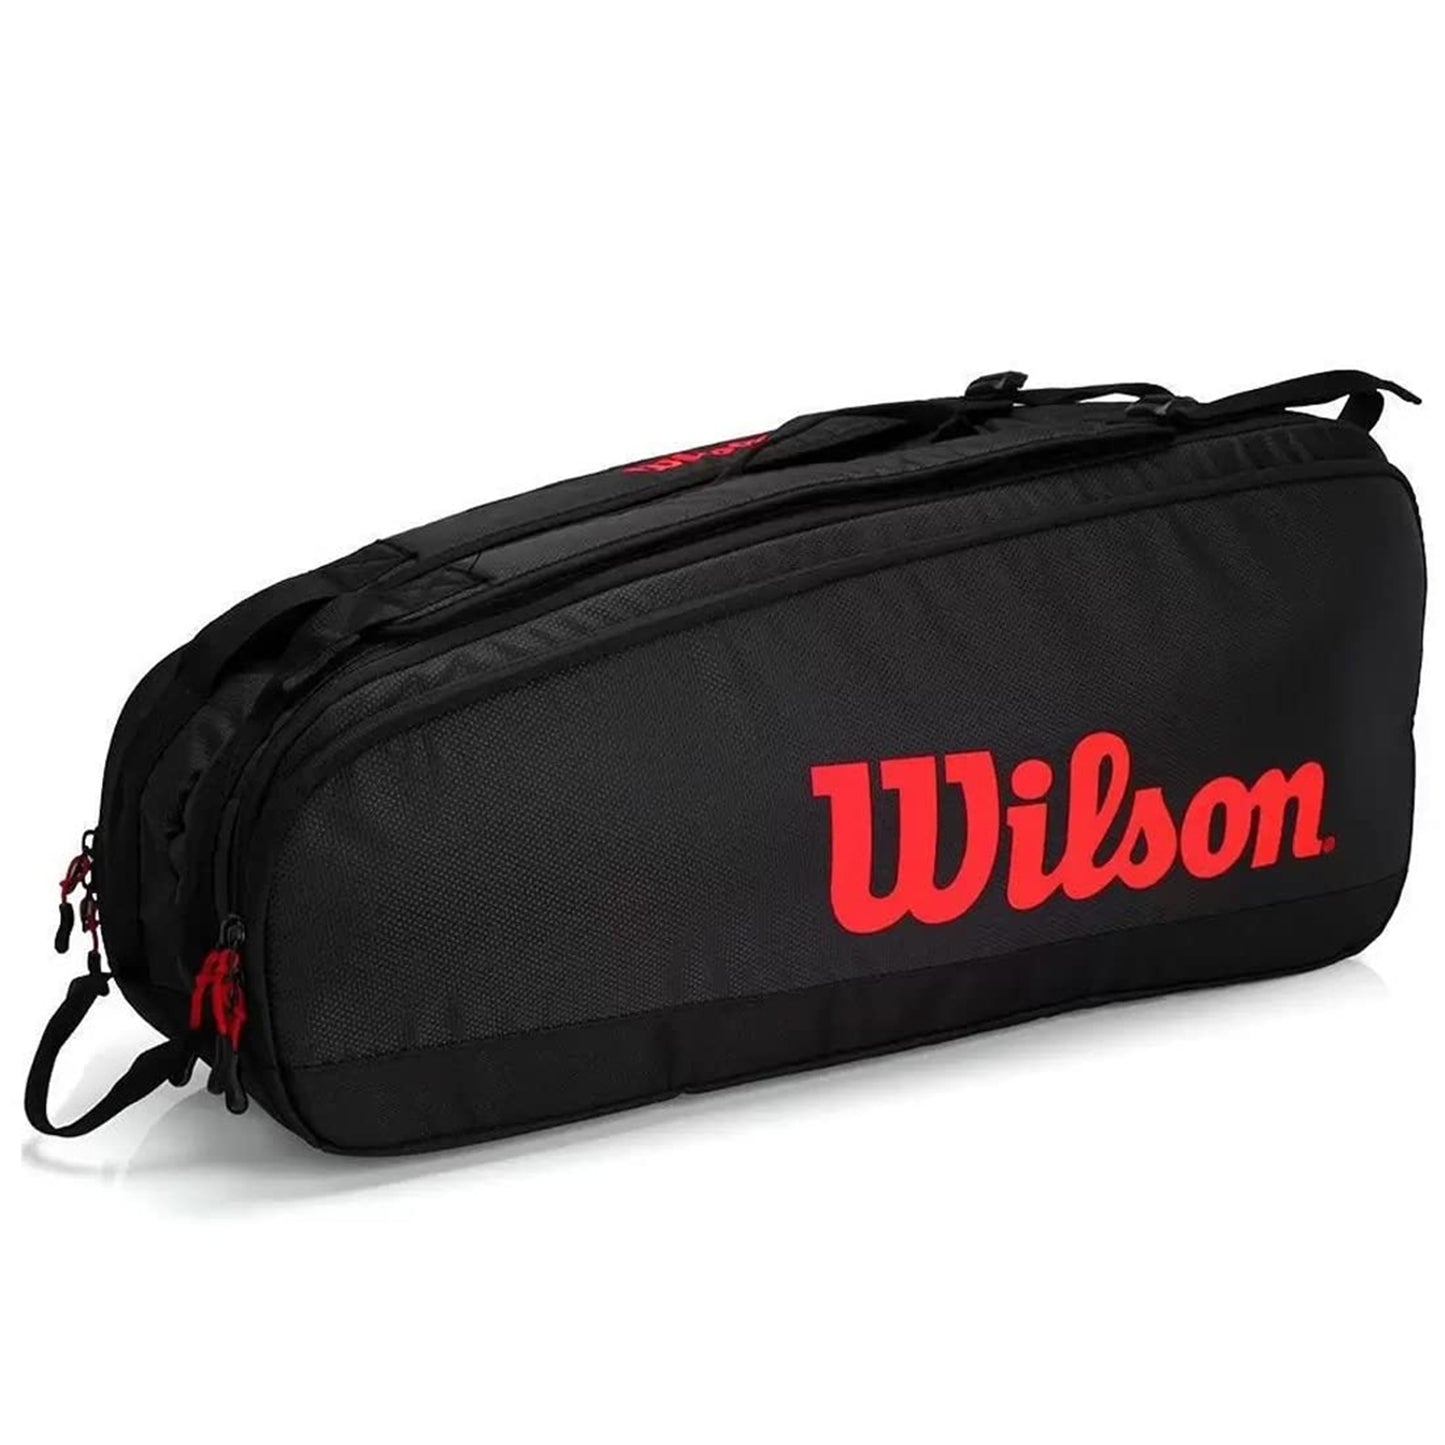 Wilson Tour 6 Tennis Racquet Bag, Red/Black - Best Price online Prokicksports.com